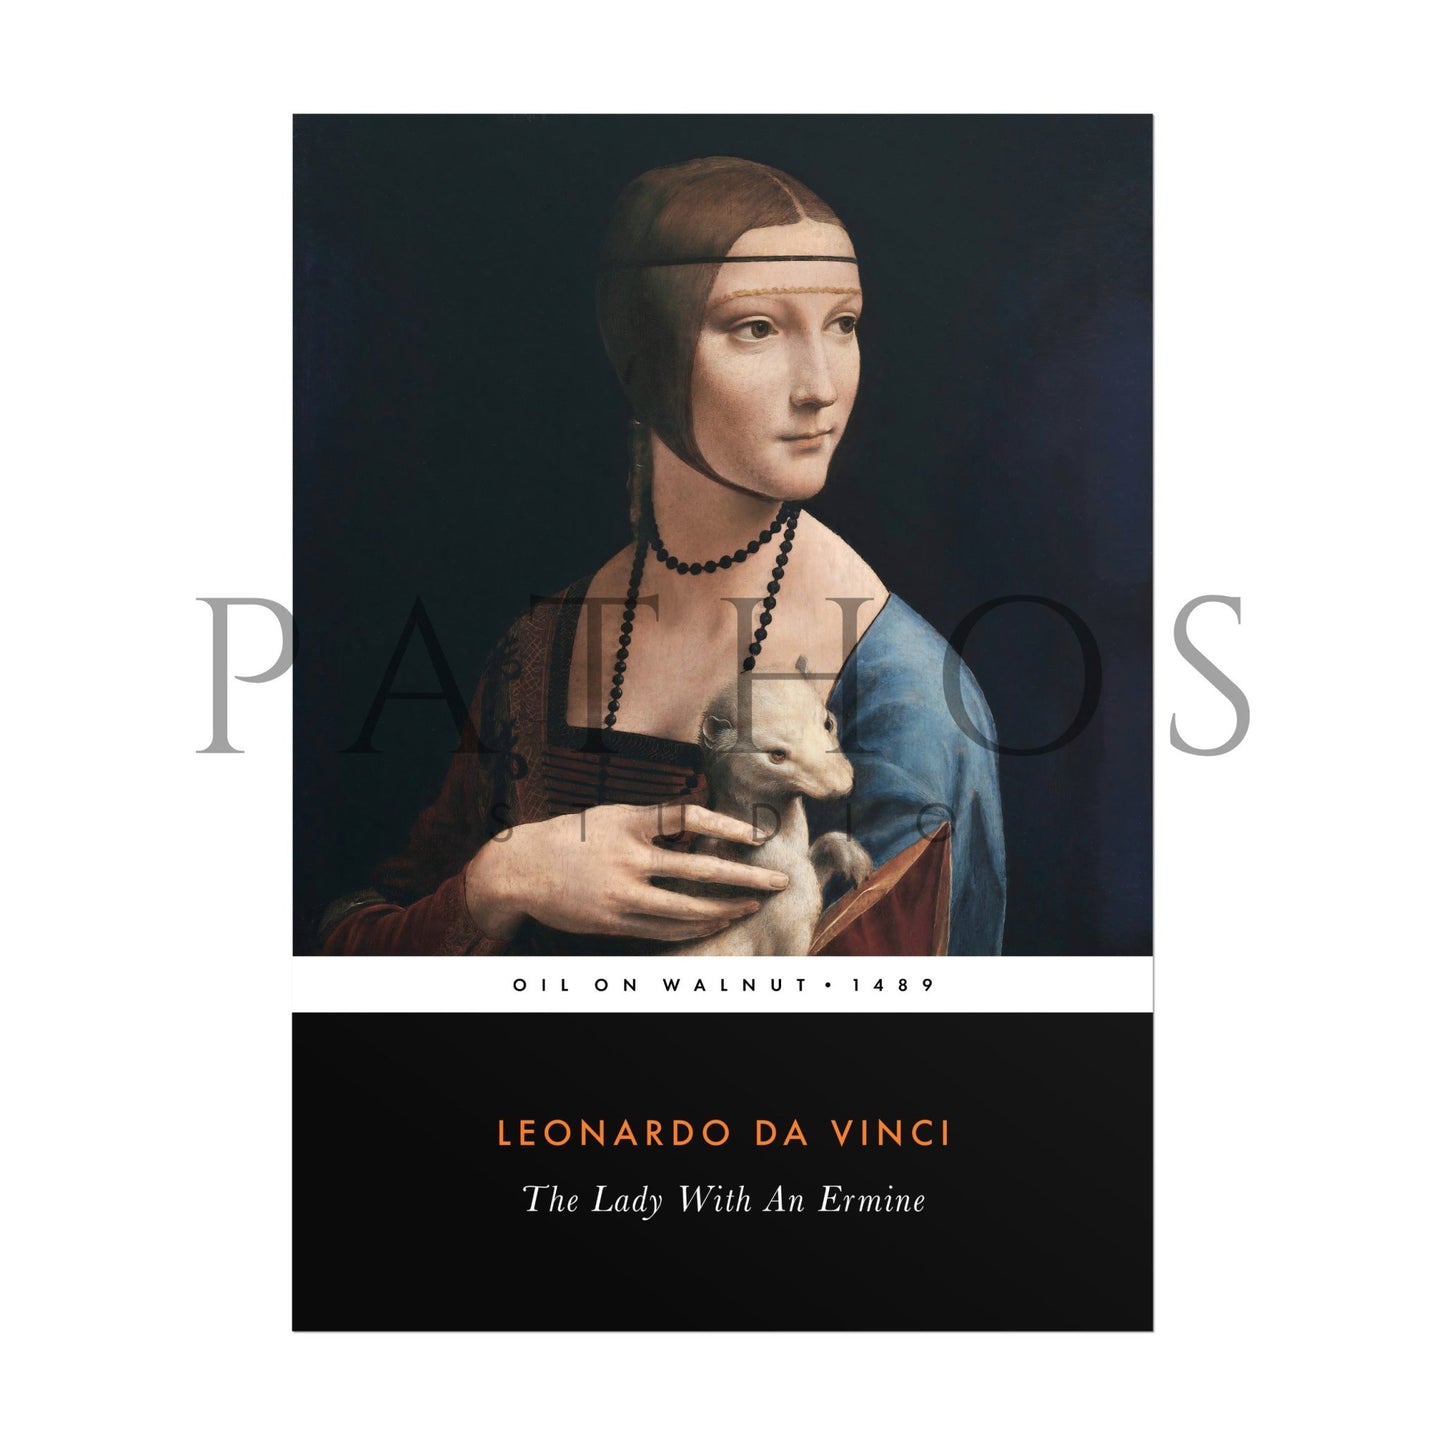 LEONARDO DA VINCI - The Lady With An Ermine (Vintage Classic Style) - Pathos Studio - Art Prints